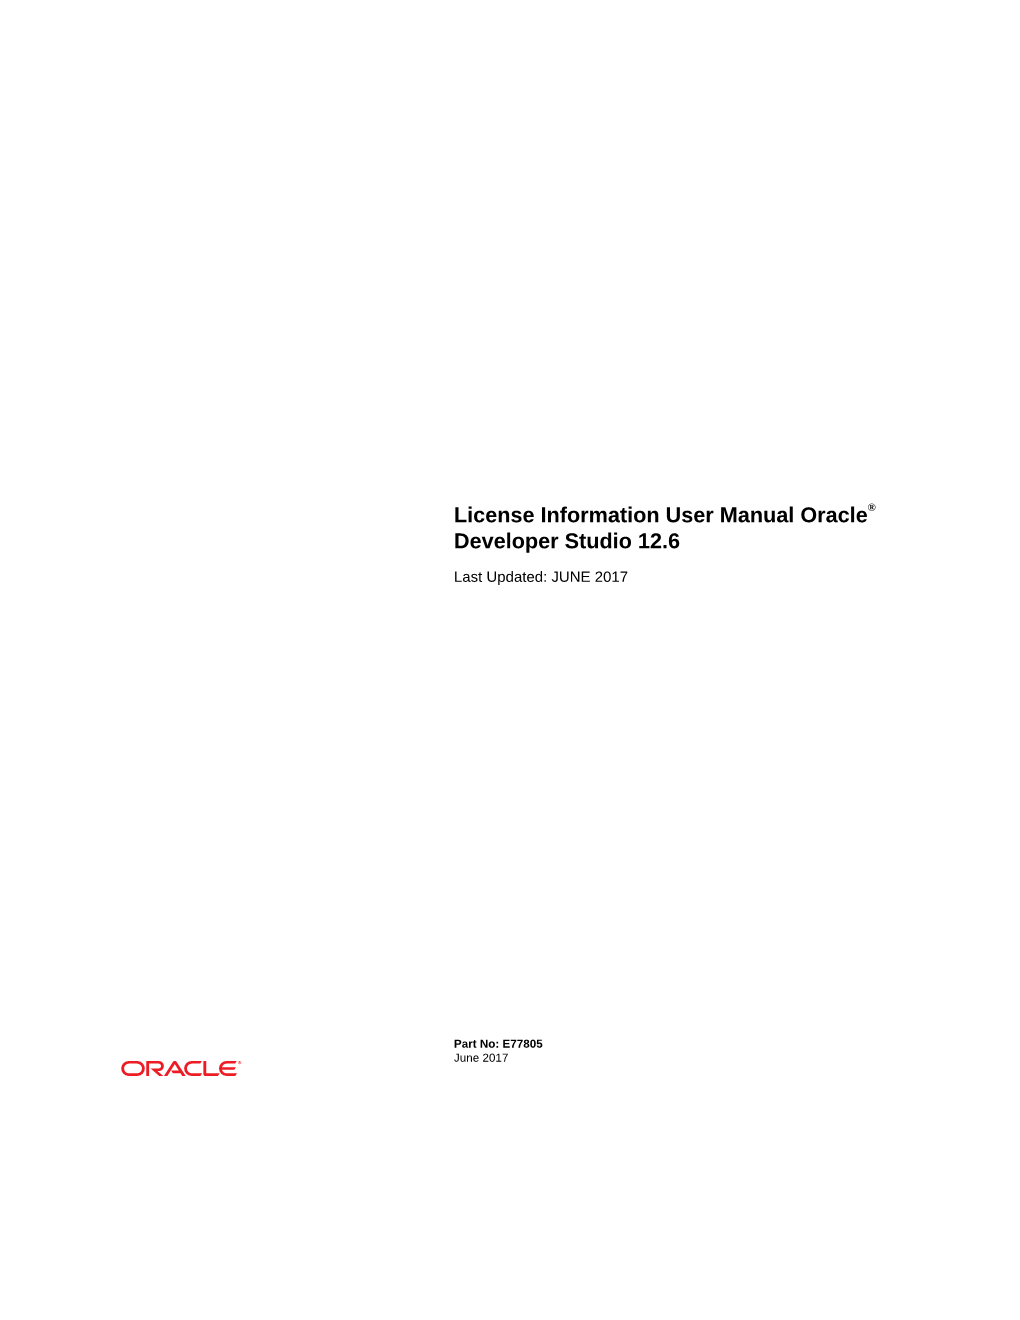 License Information User Manual Oracle® Developer Studio 12.6